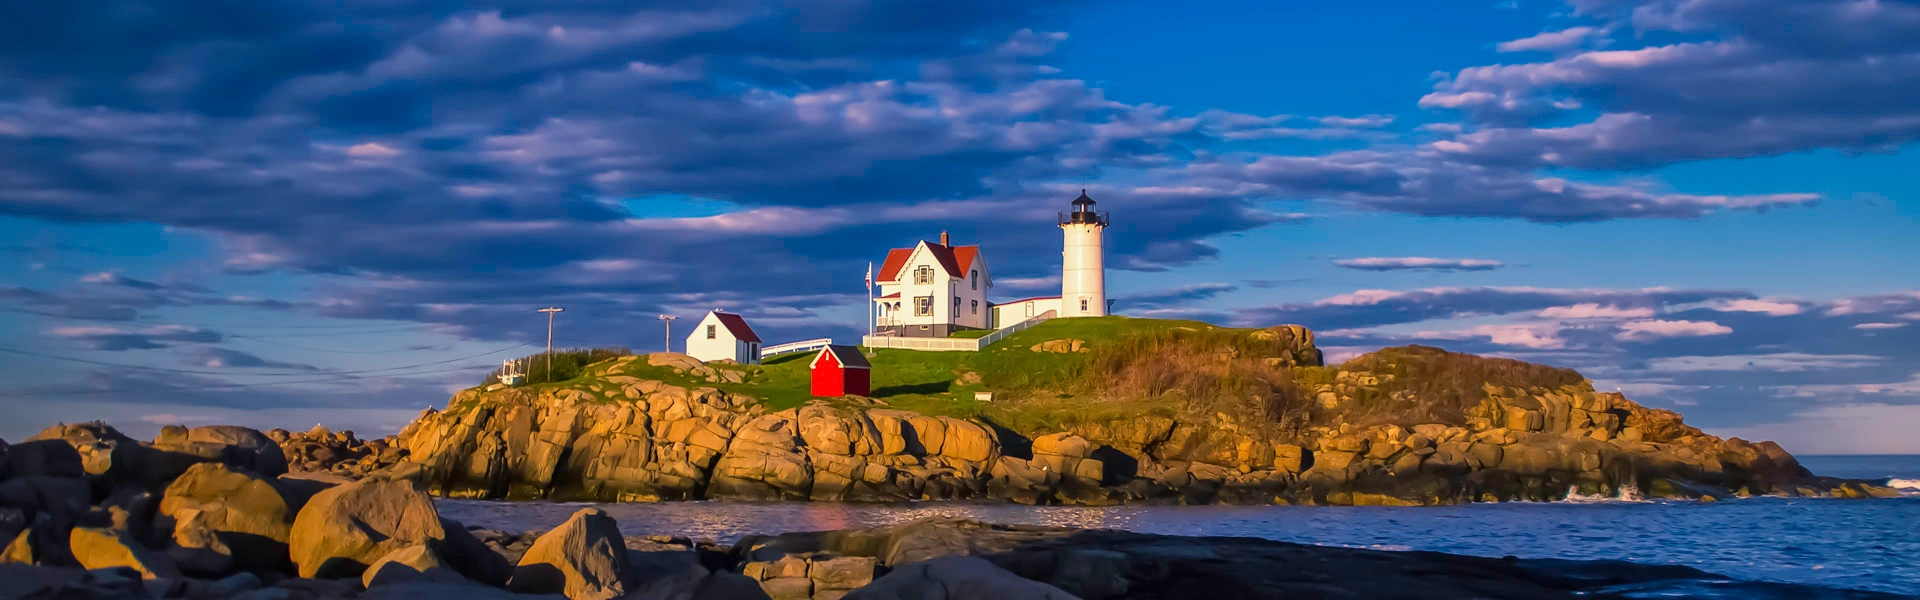 New England Lighthouses